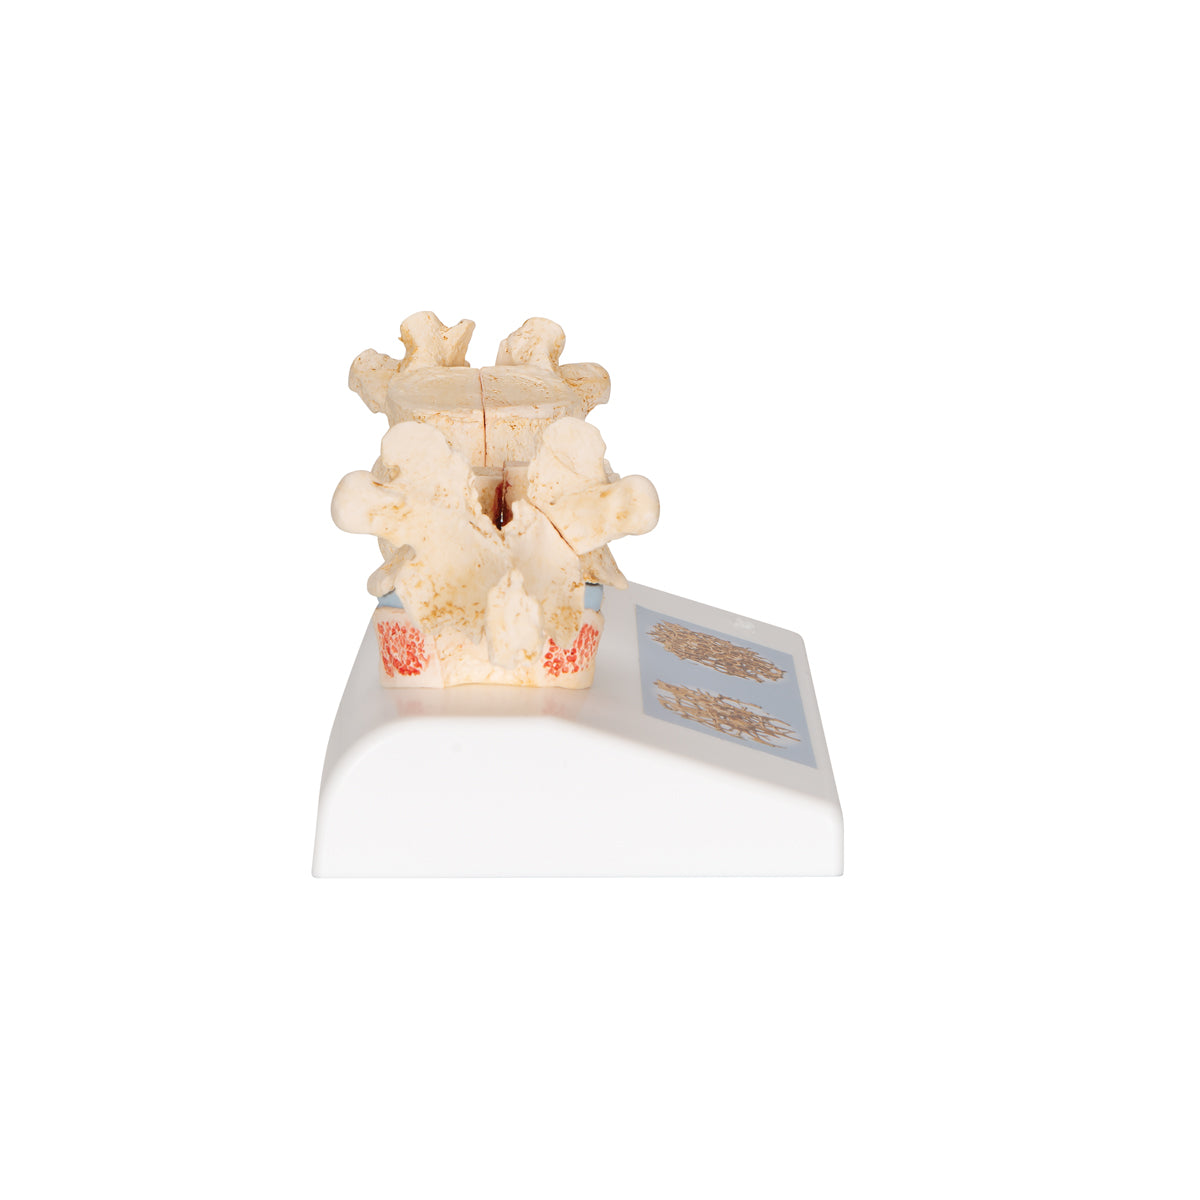 Anatomical model of vertebrae illustrating osteoporosis vs healthy bone tissue